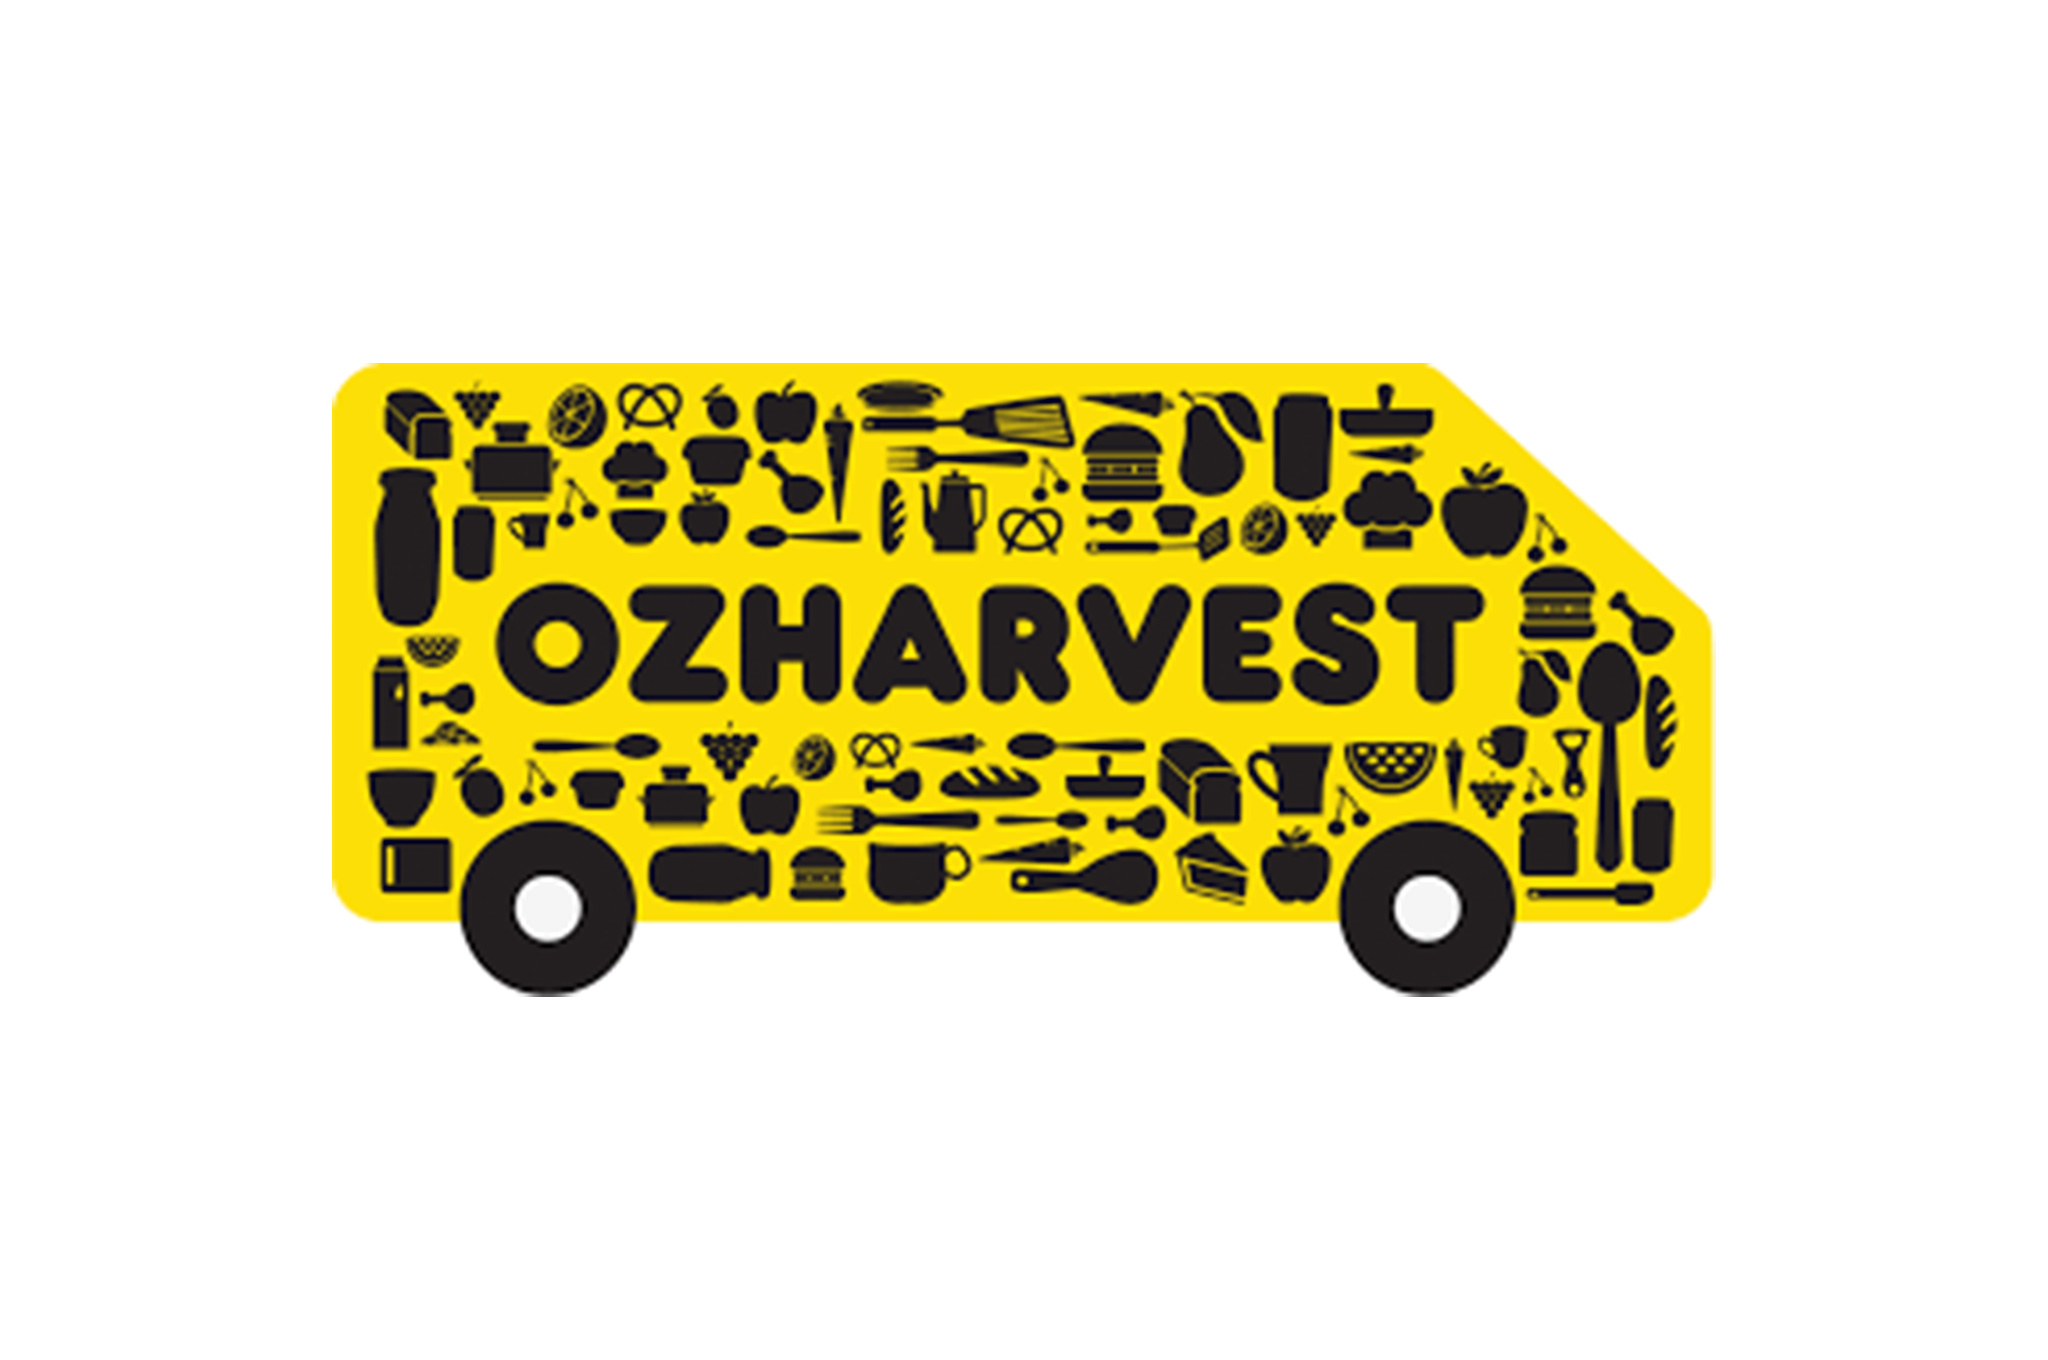 Oz Harvest logo